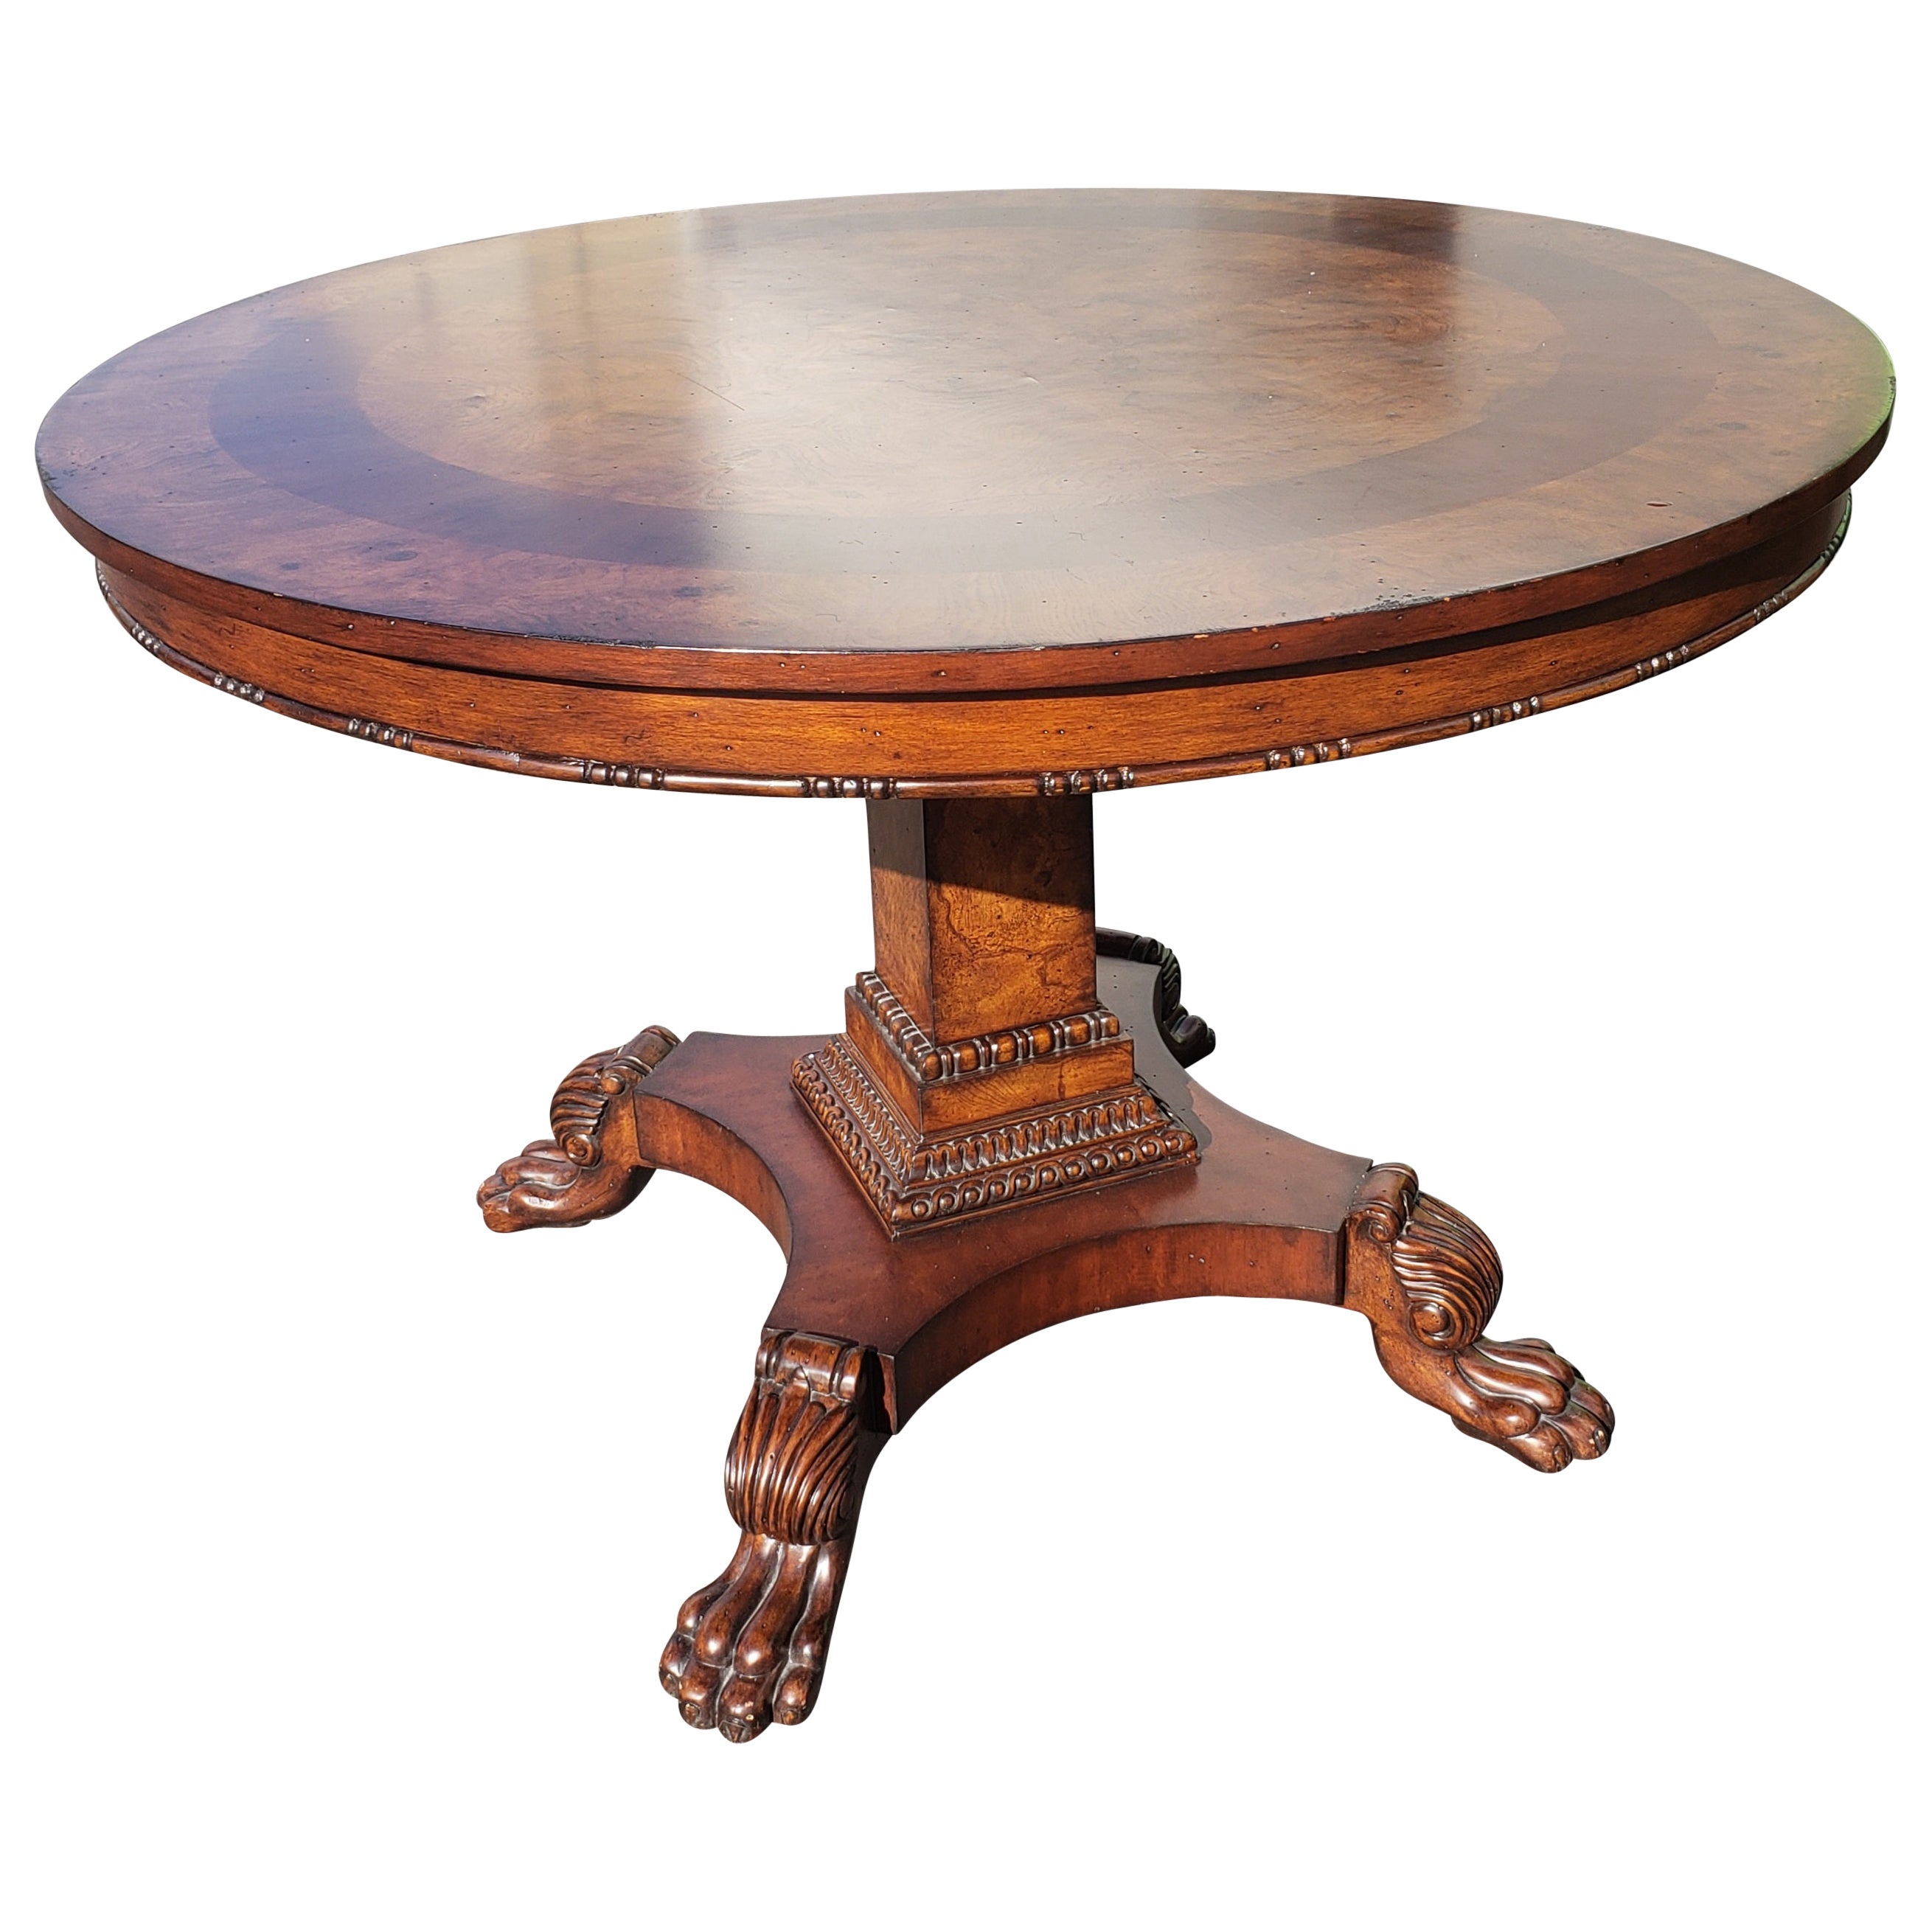 Banded Burl Walnut Distressed Center Table with Veneered Quad Part Pedestal Base